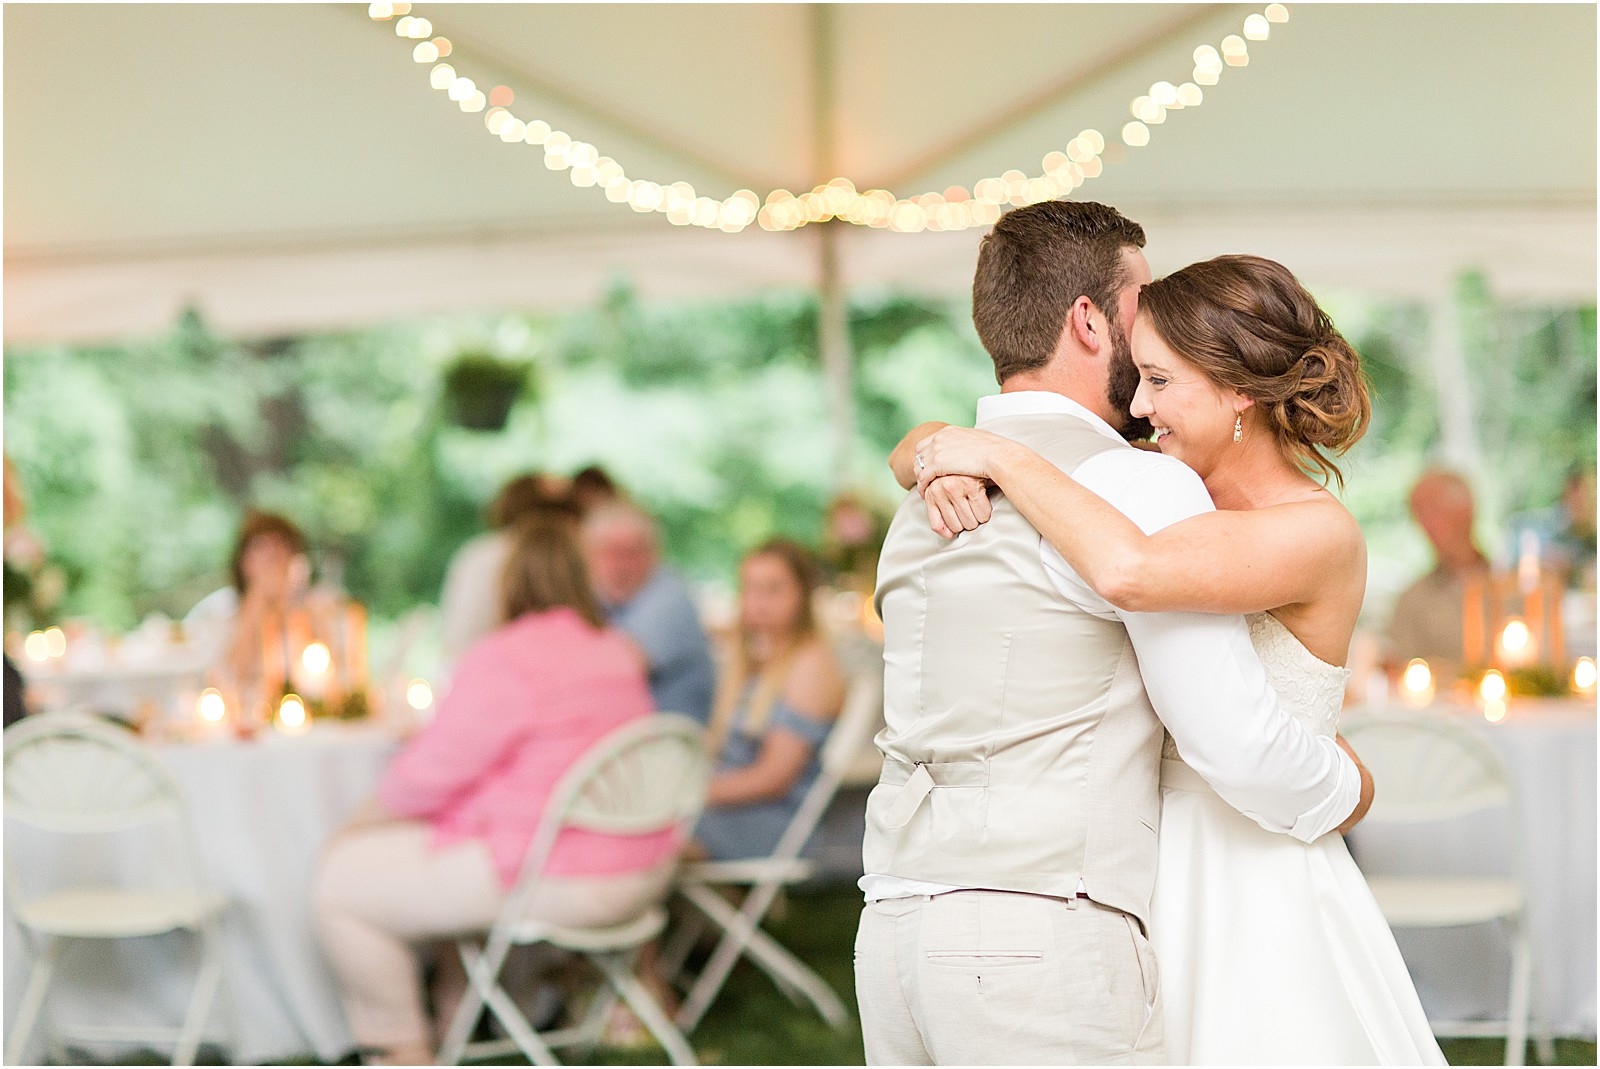 A Evansville Indiana Backyard Wedding | Bailey and Ben 084.jpg